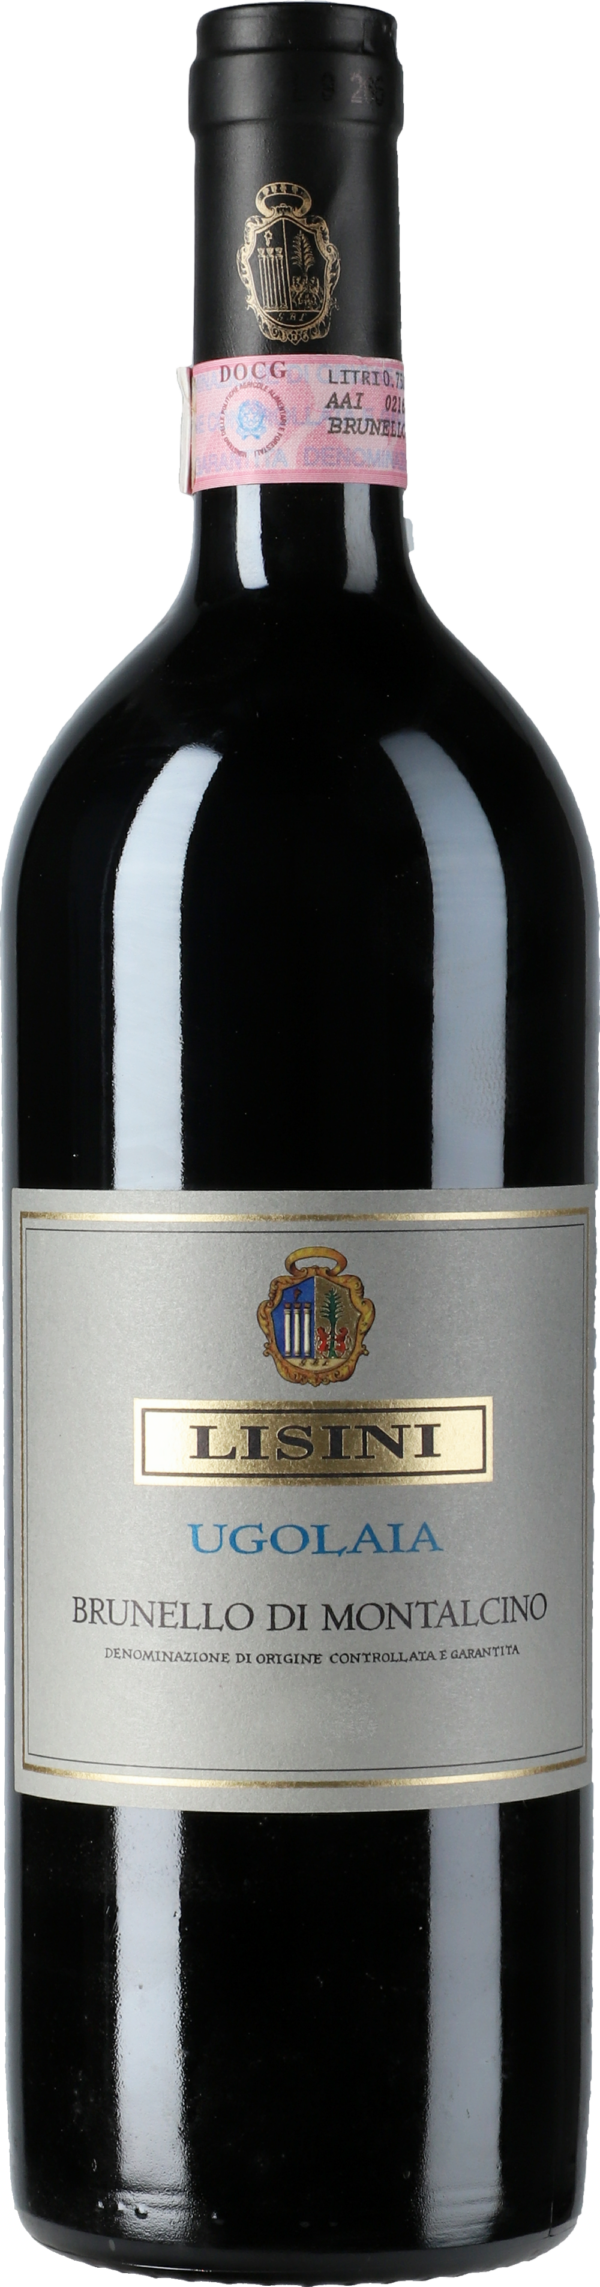 Product image of Lisini Brunello di Montalcino Ugolaia 2015 from 8wines